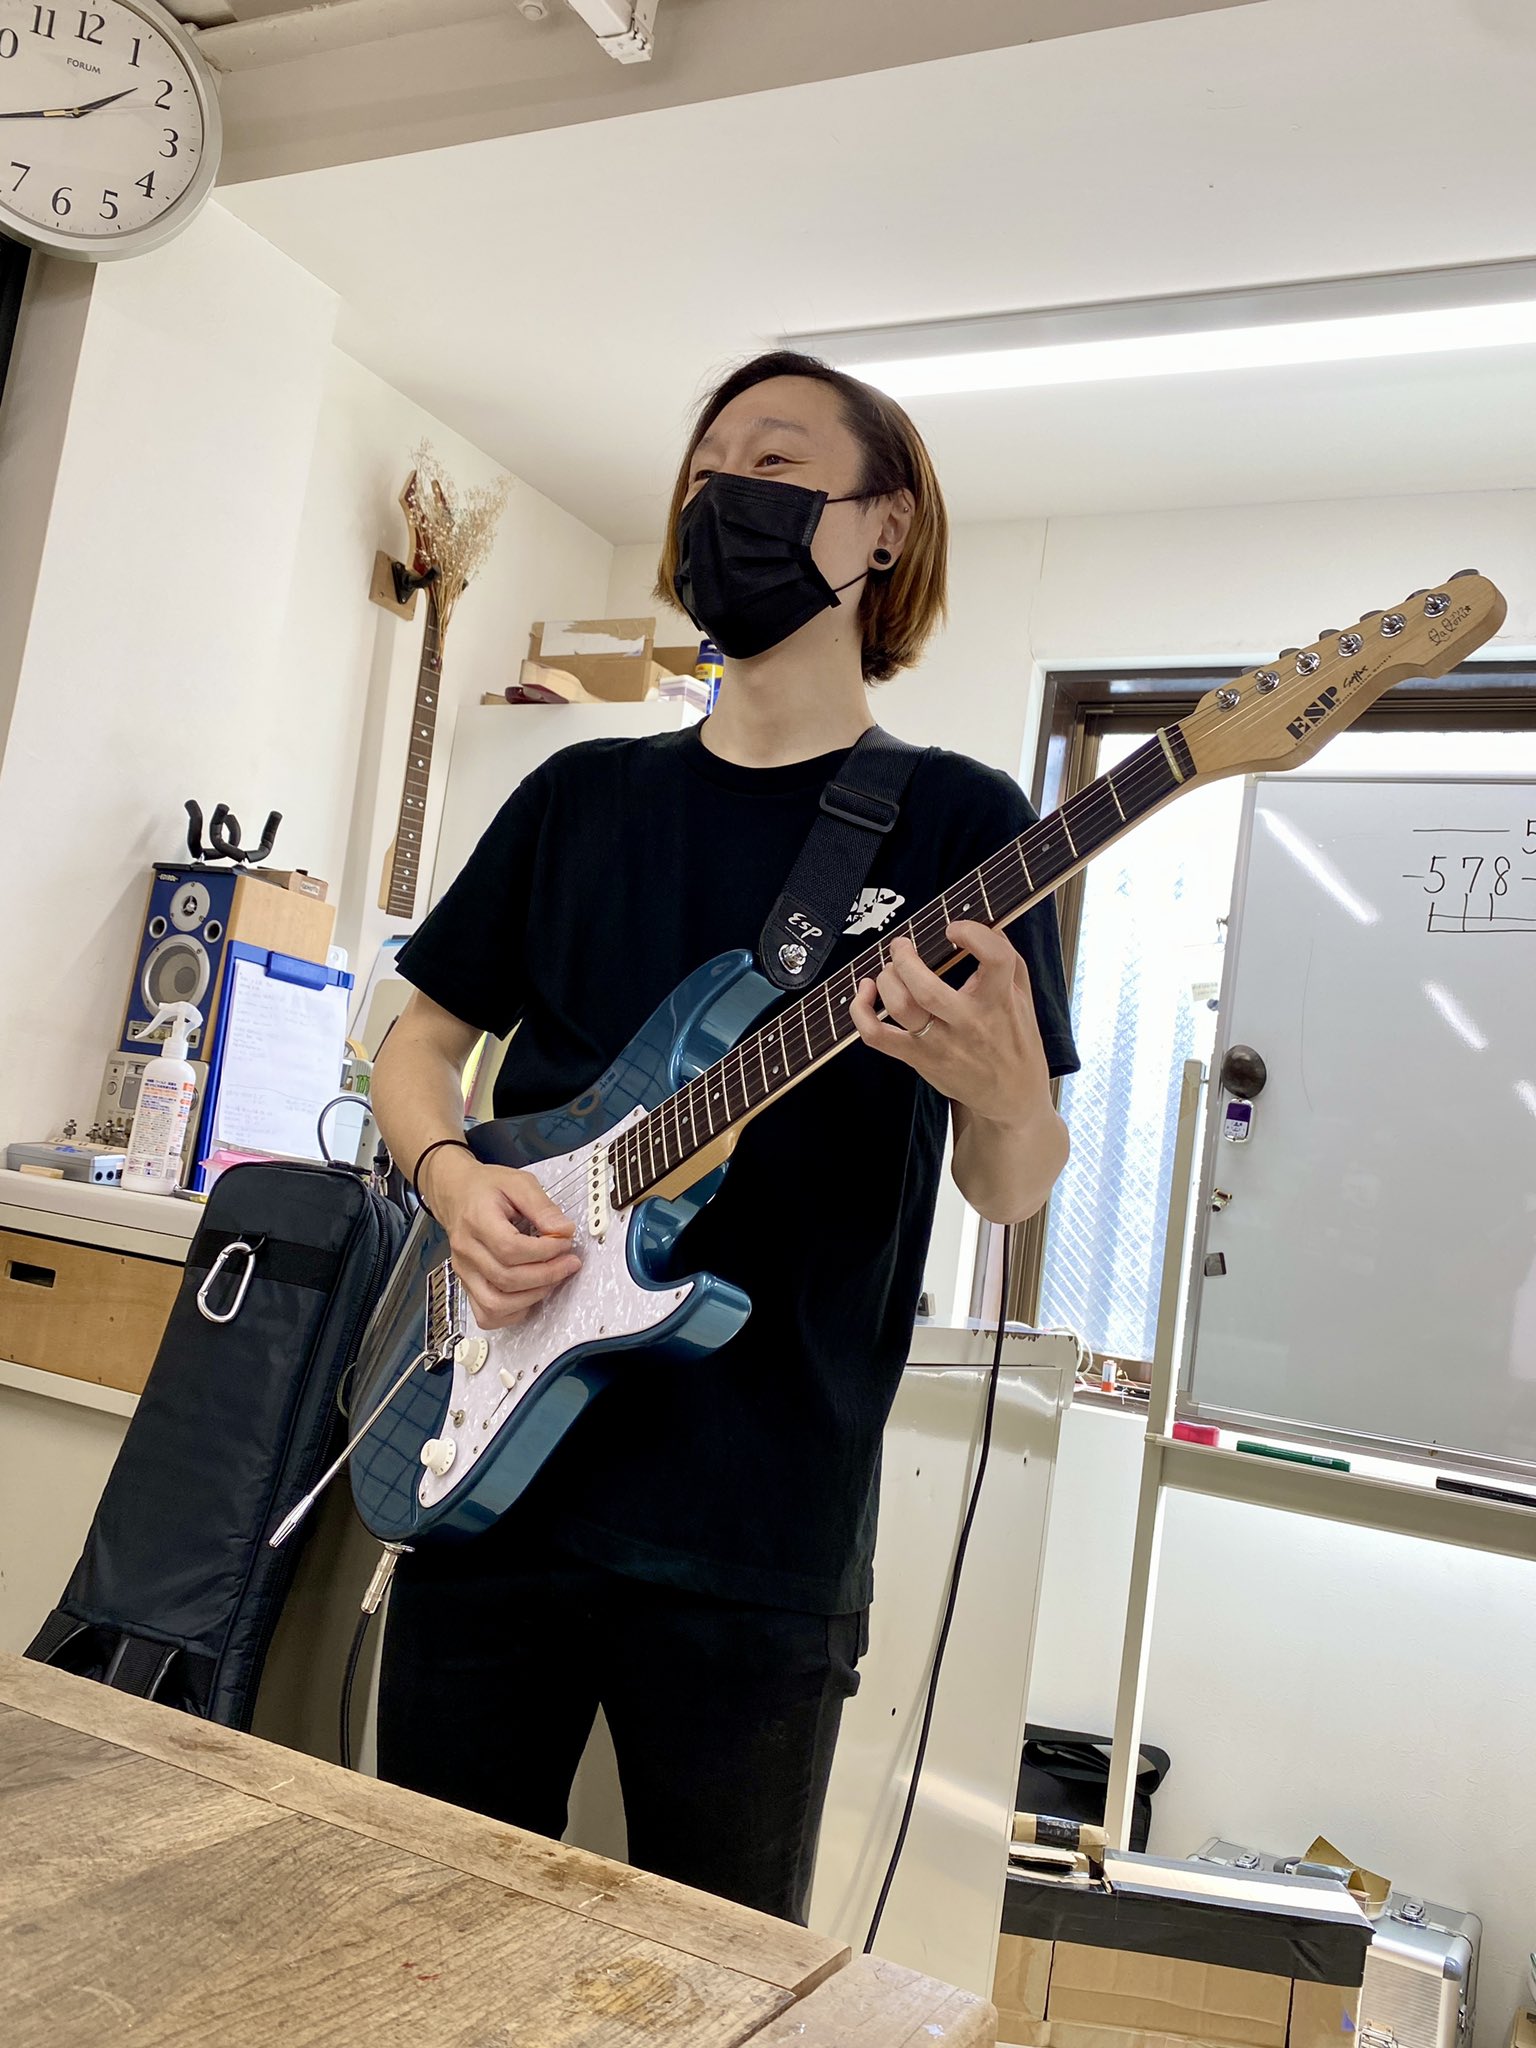 Espギタークラフト アカデミー大阪校 Gcaosaka Twitter